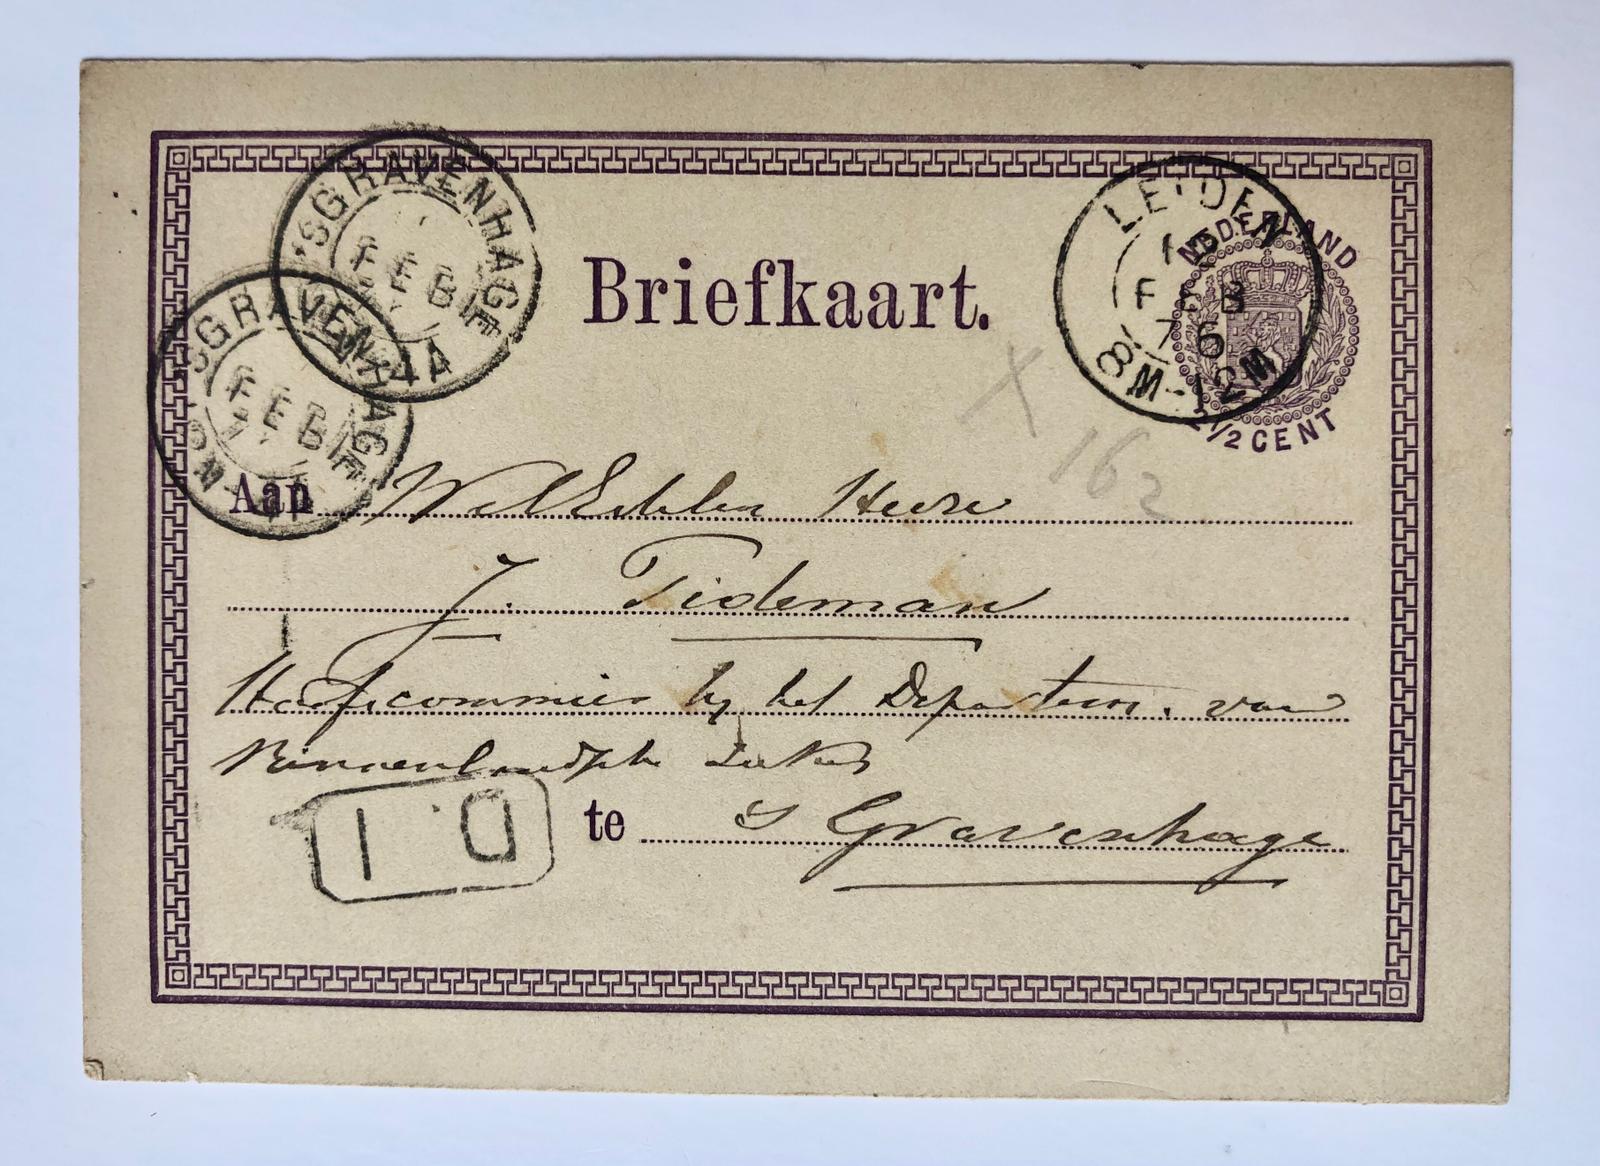  - [Postcard 1876] Briefkaart van mr. J.T. Buys, d.d. Leiden 1876, aan J. Tideman, hoofdcommies Dep. Binnenlandse Zaken te 's-Gravenhage. Manuscript.